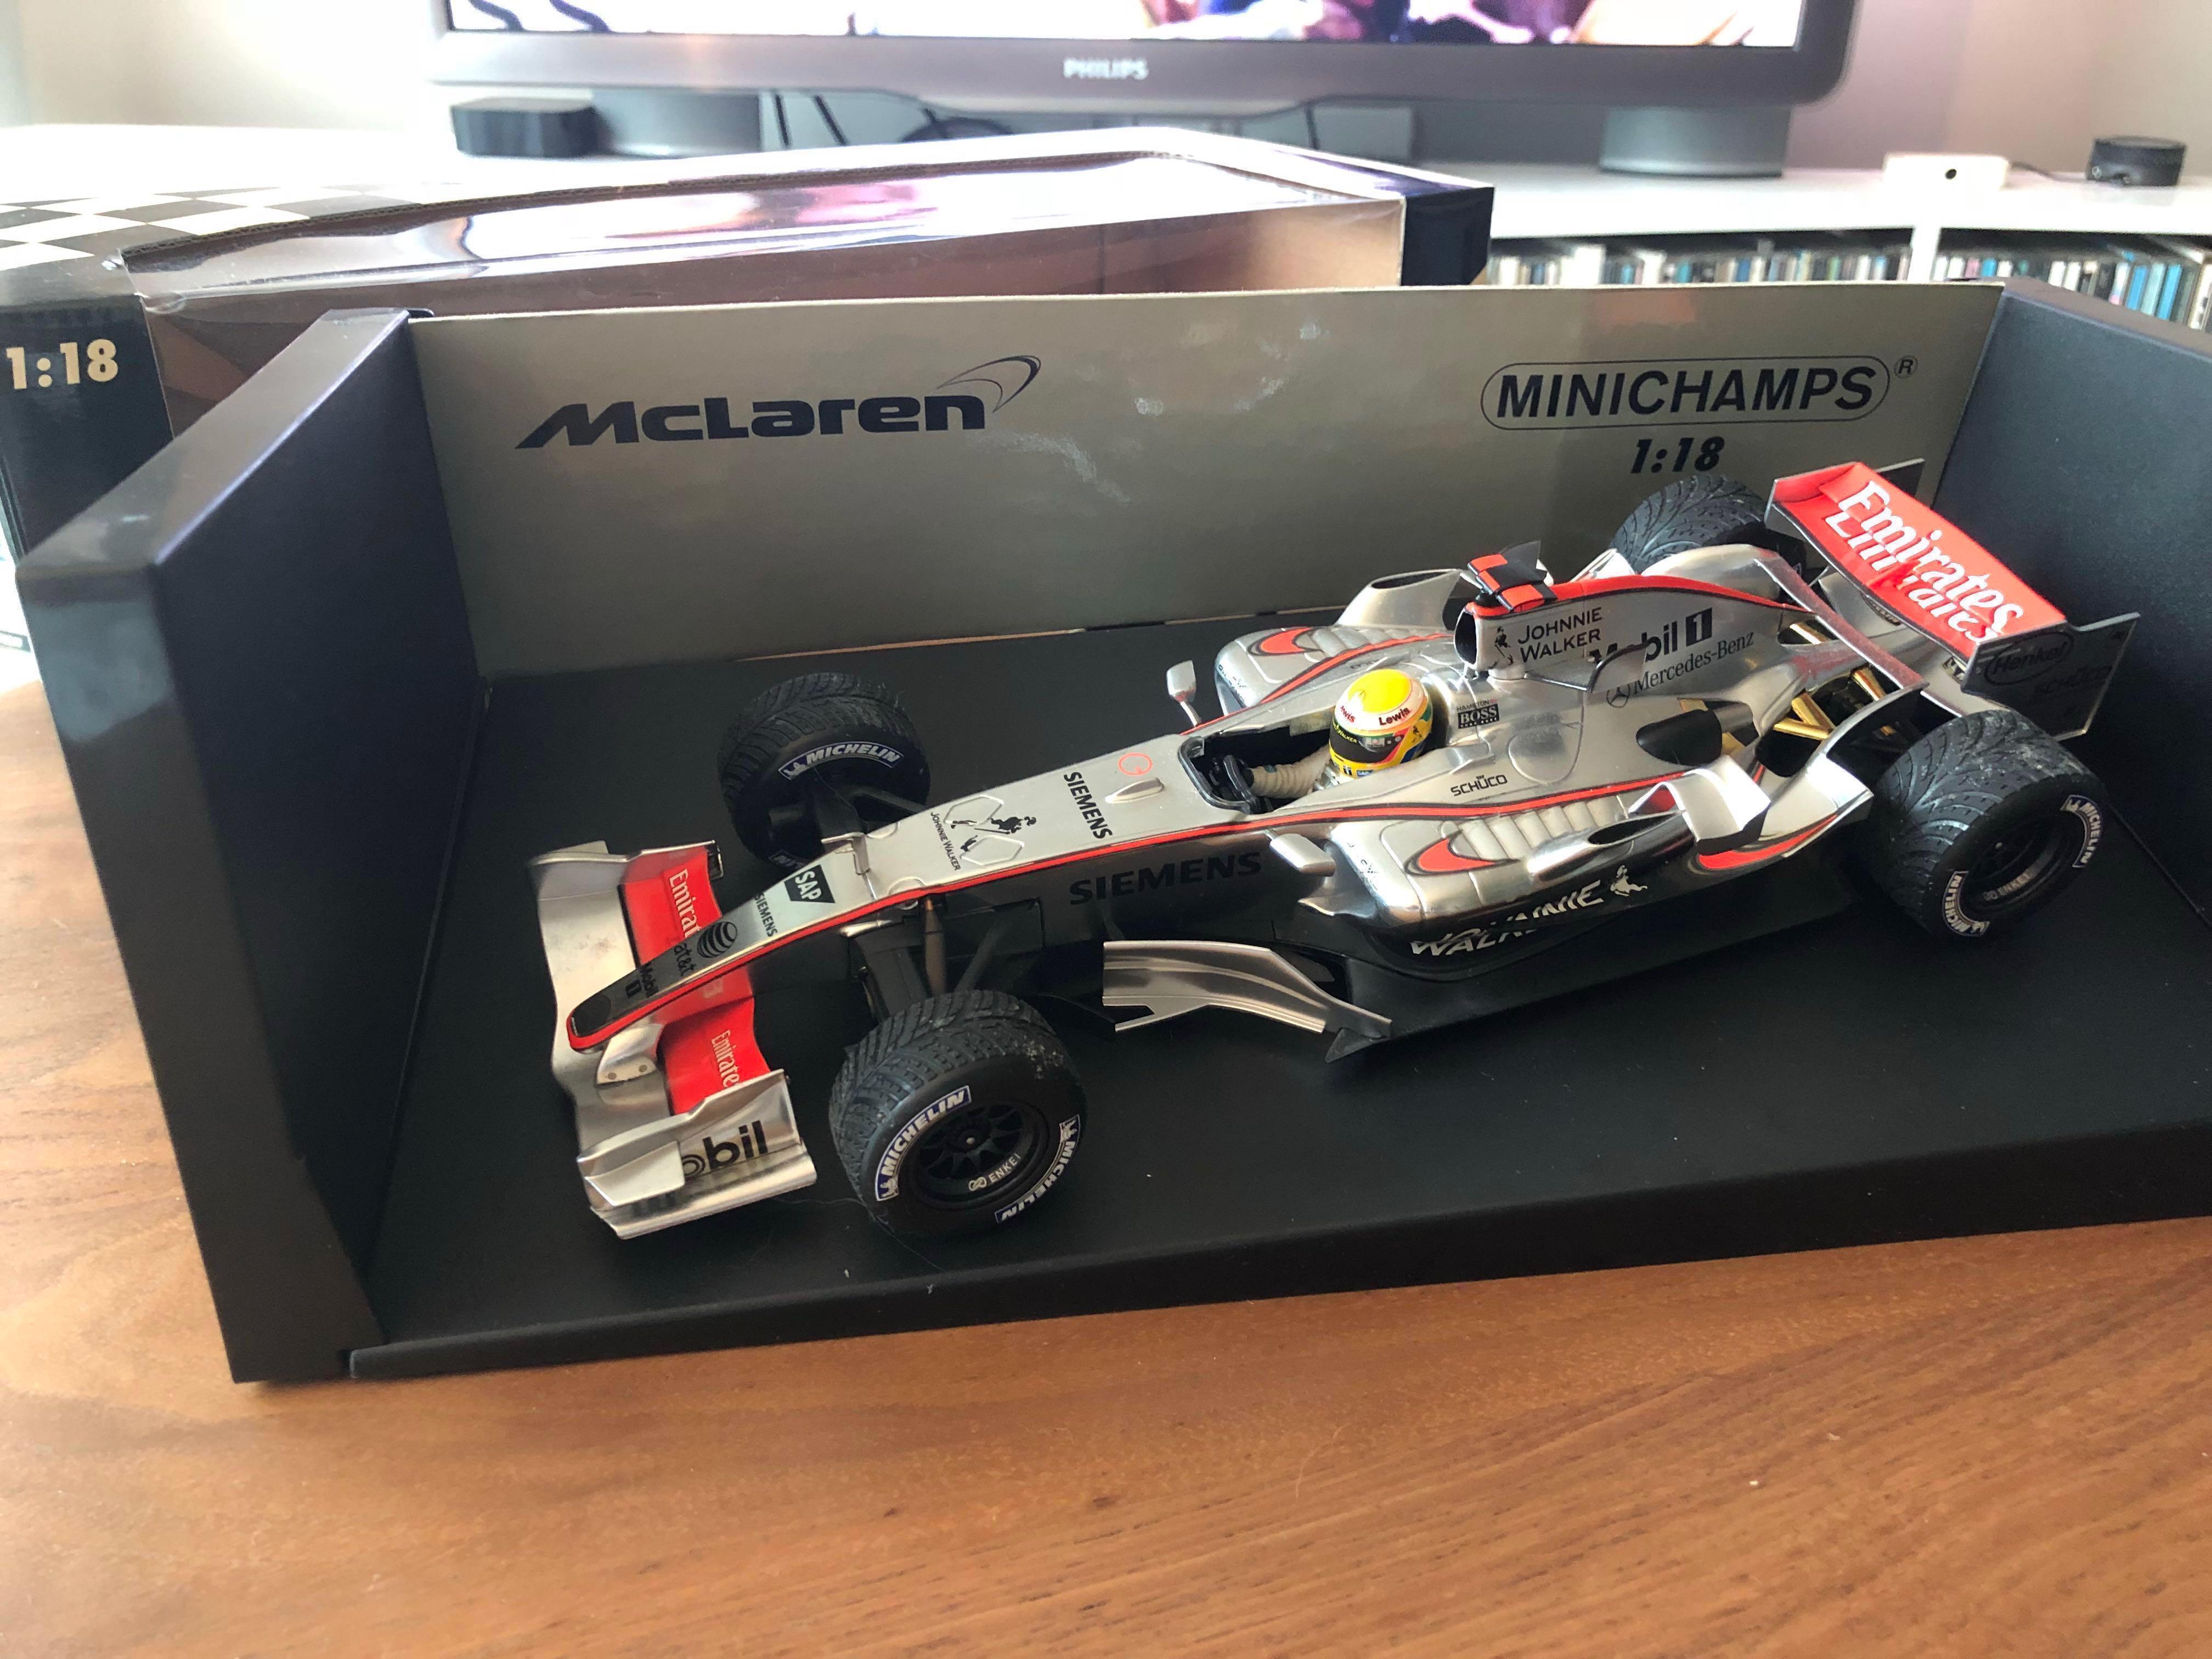 Minichamps McLaren Mercedes MP4-21 (1/18 scale) Lewis Hamilton